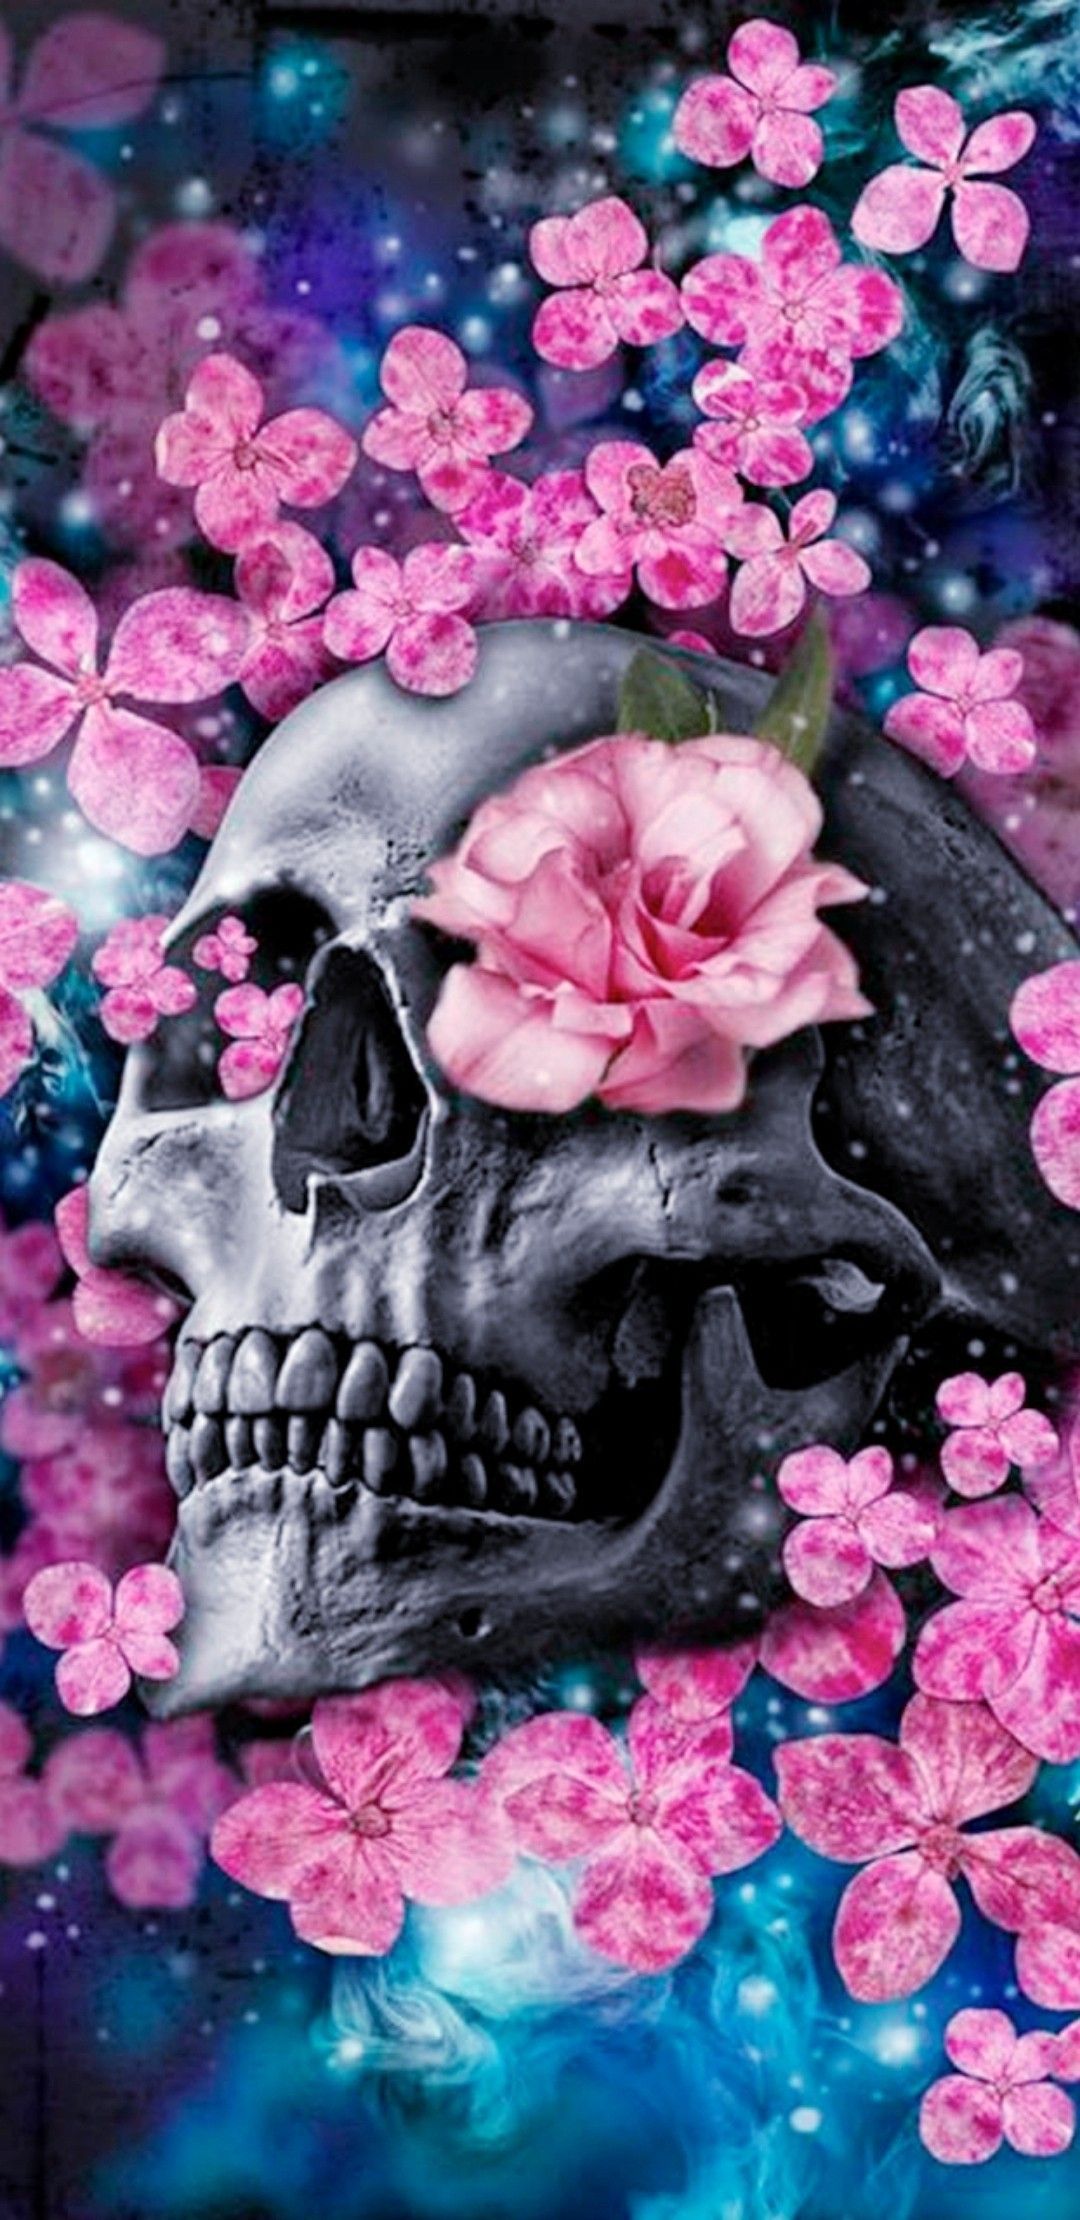 Skull / Skeleton Wallpaper. Skull art, Skull wallpaper, Skull artwork